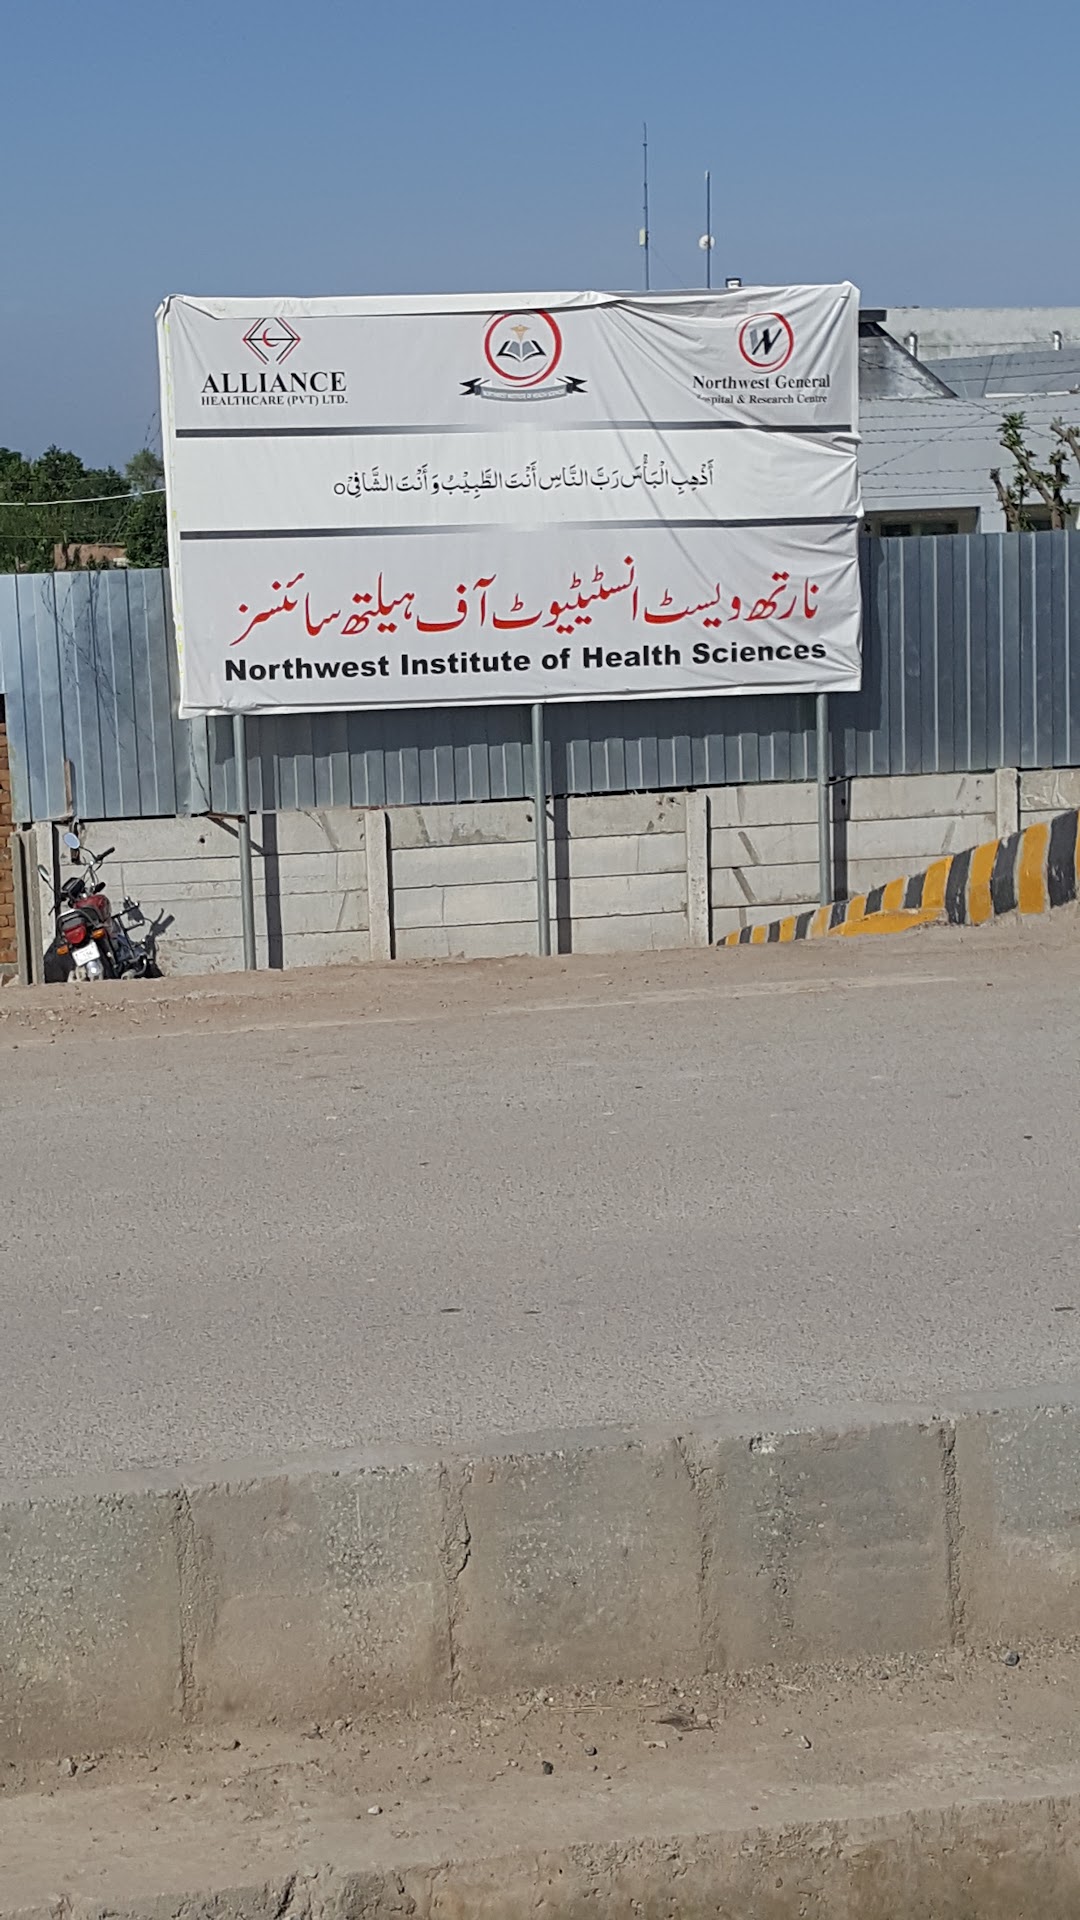 NORTH WEST MEDICAL UNIVERSITY, Peshawar